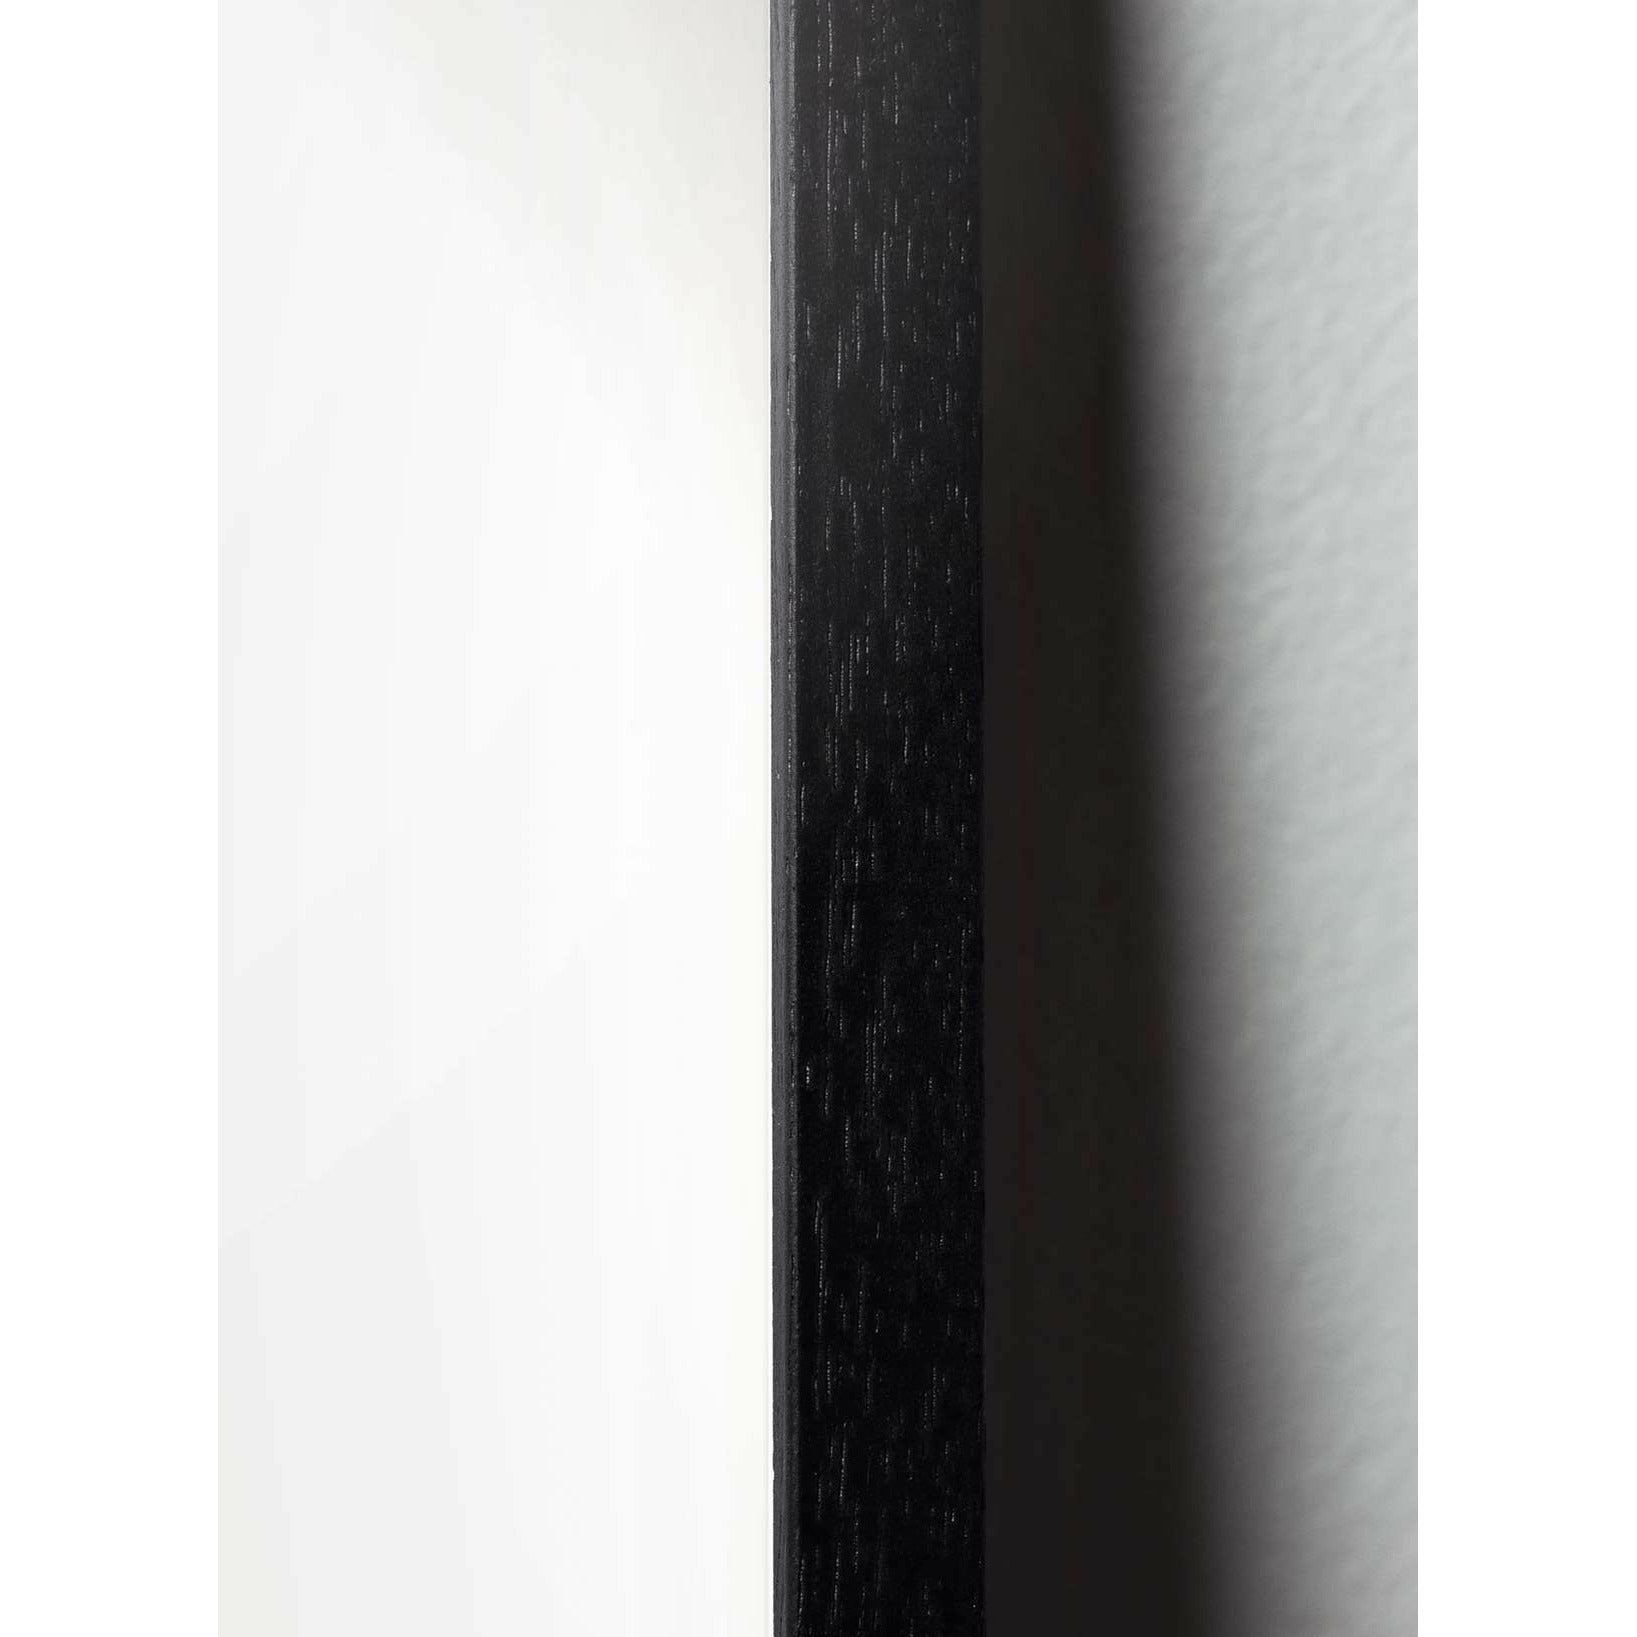 Brainchild Äggklassisk affisch, ram i svart -målat trä 30x40 cm, mörkblå bakgrund